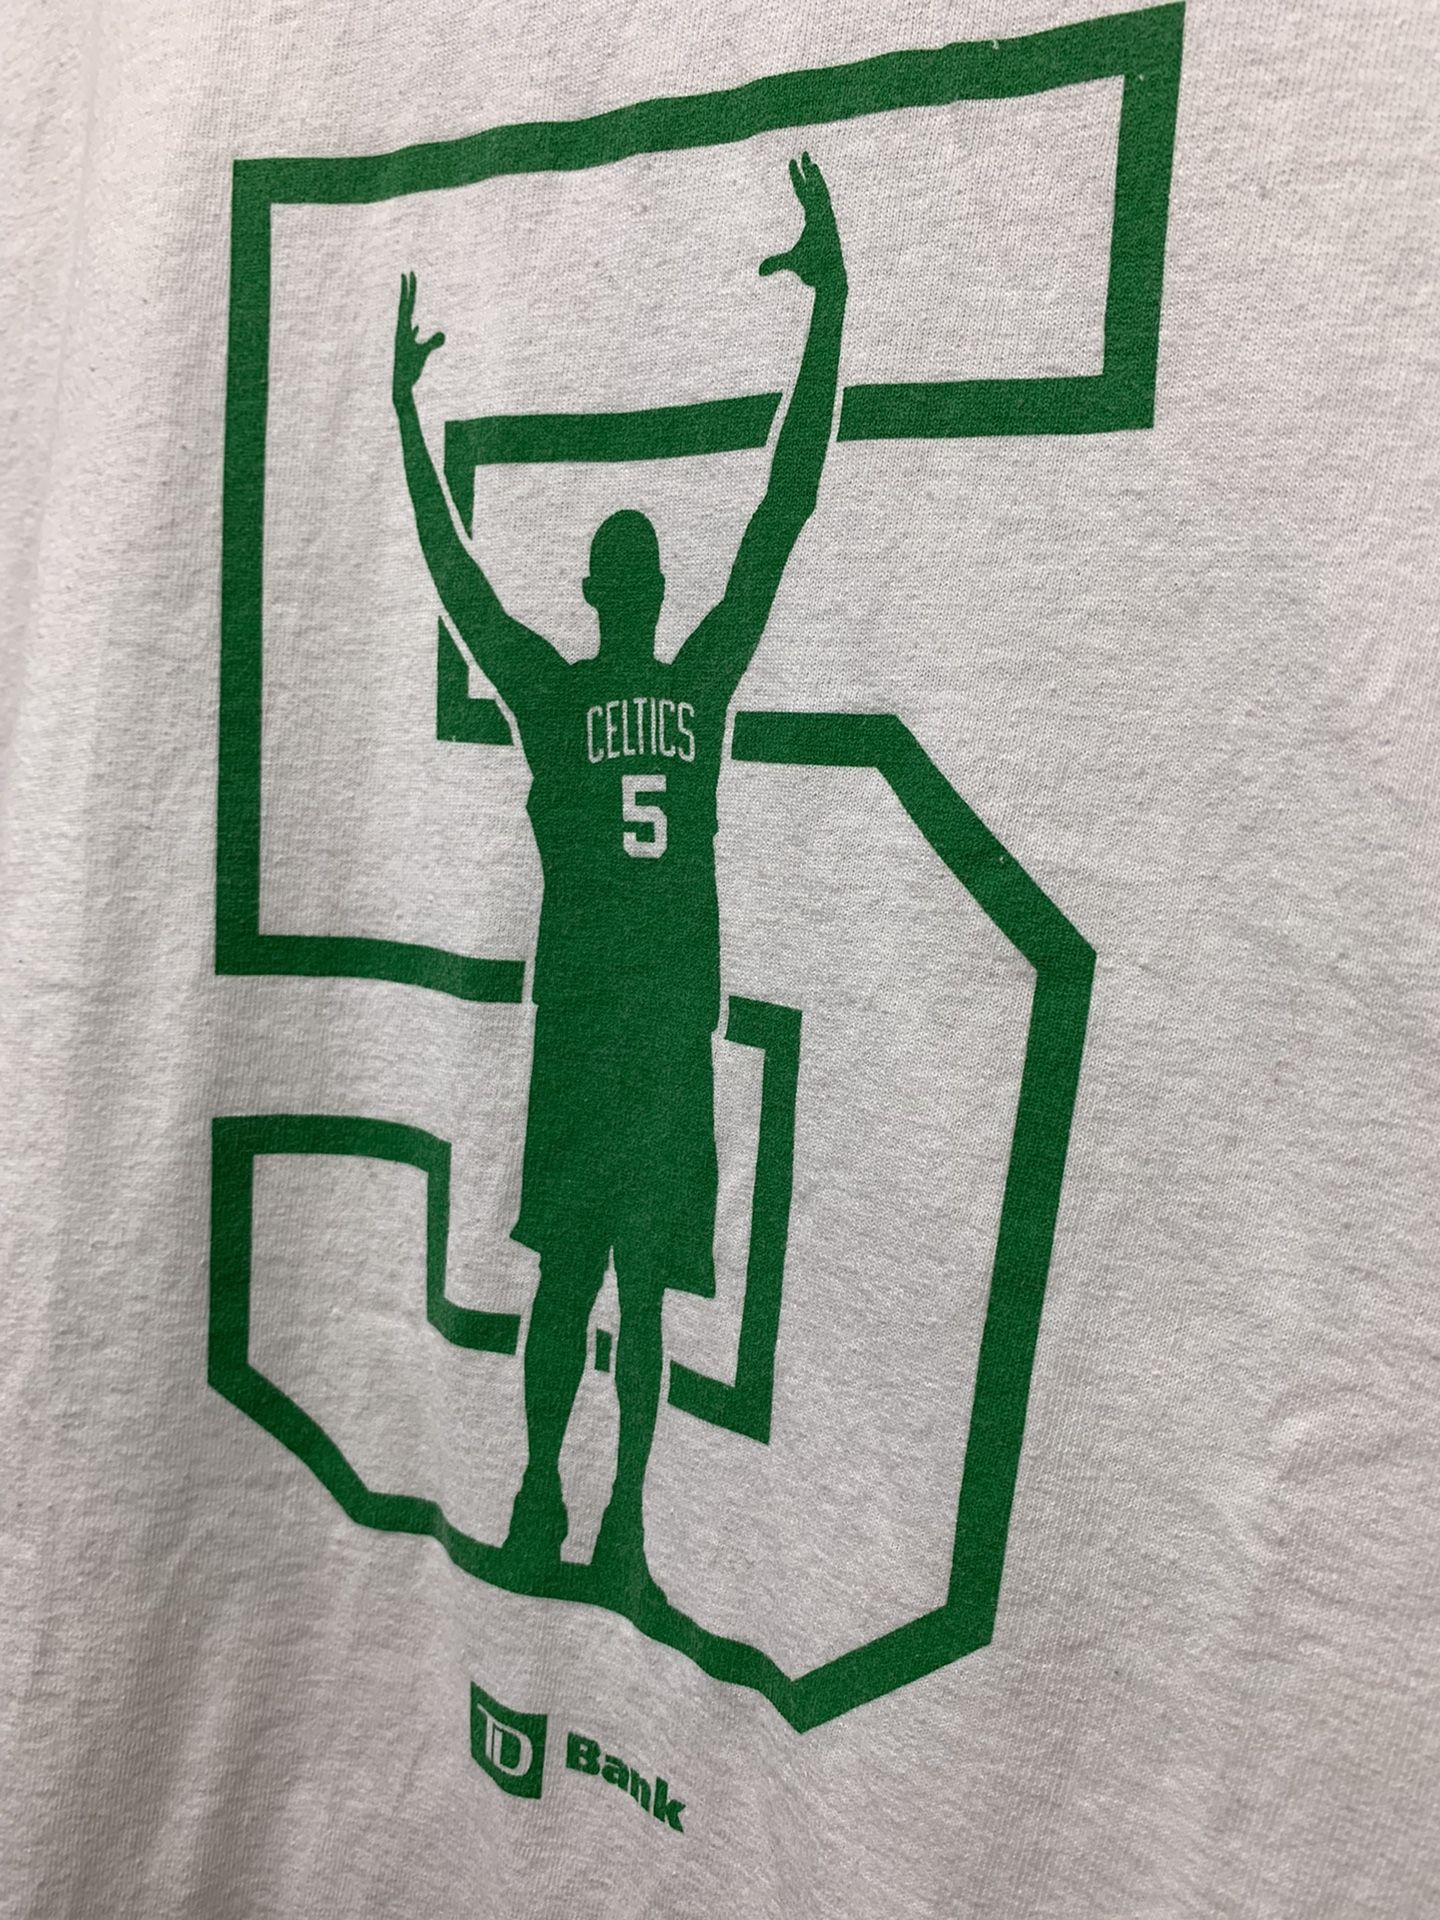 Boston Celtics Kevin Garnett Retirement Ceremony Number 5 SGA Jersey XL T- Shirt. for Sale in Lynn, MA - OfferUp